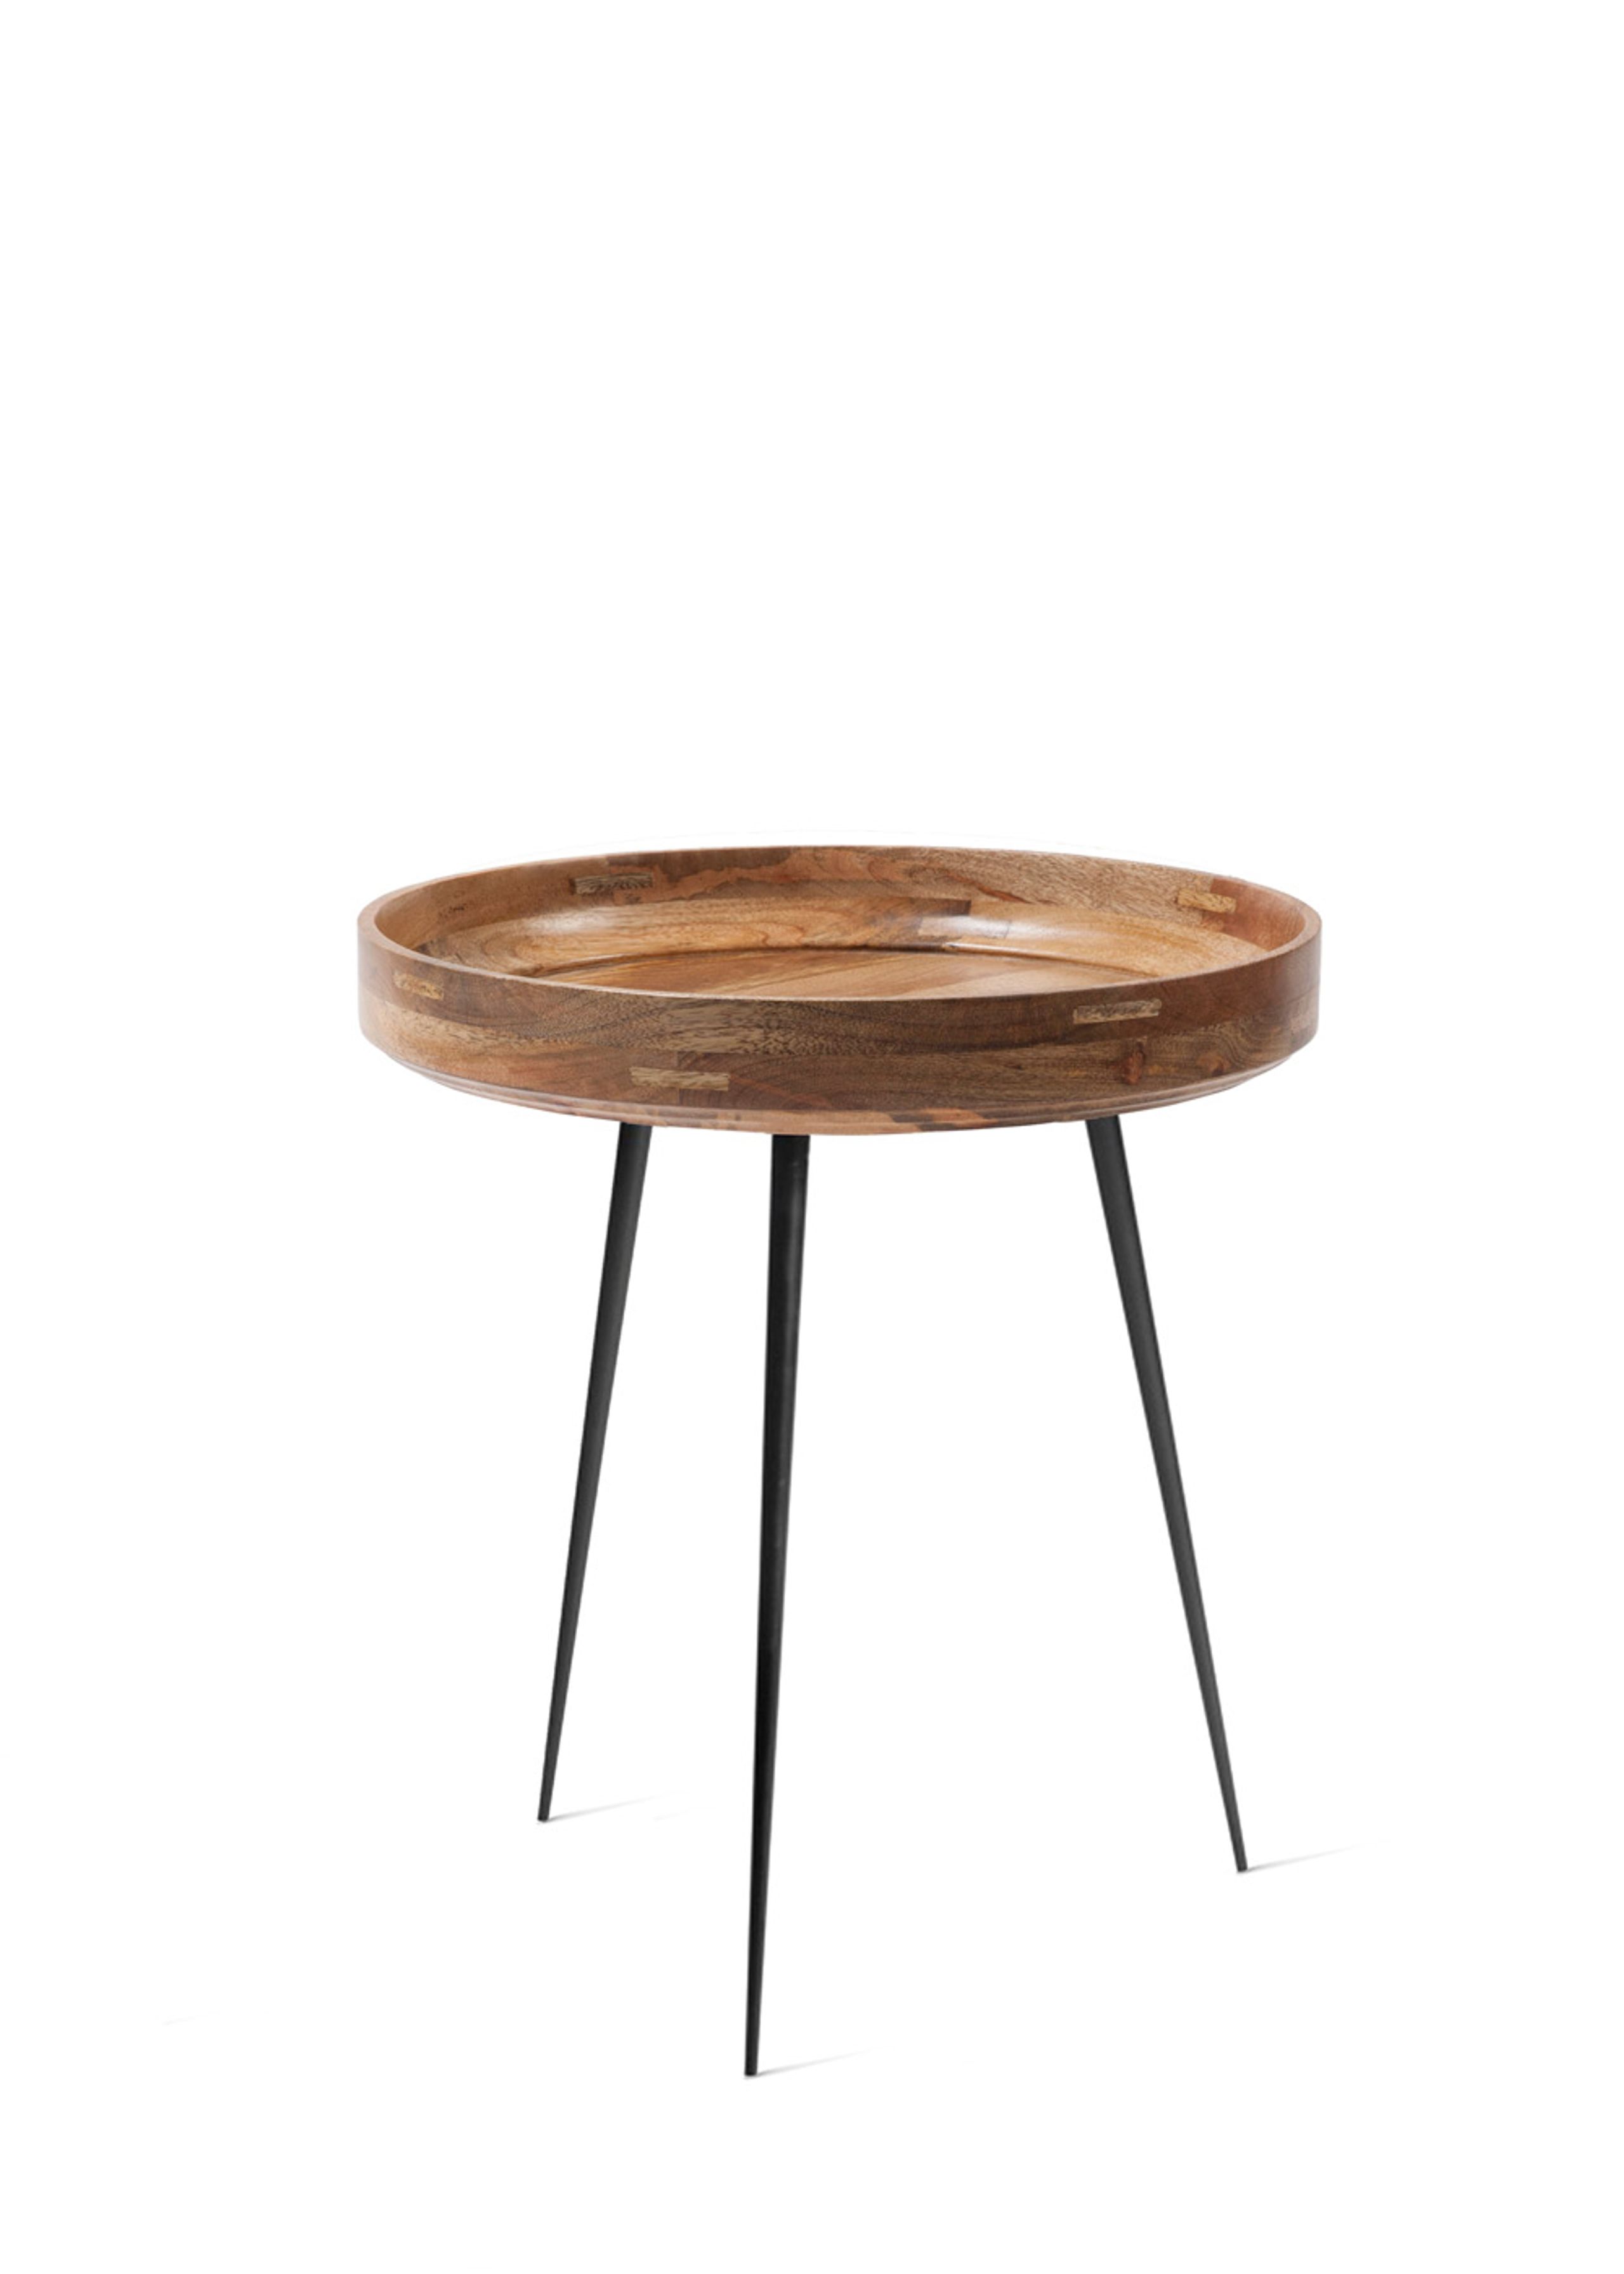 Mater - Conseil d'administration - Bowl Table - Natural Lacquered Mango Wood - Medium